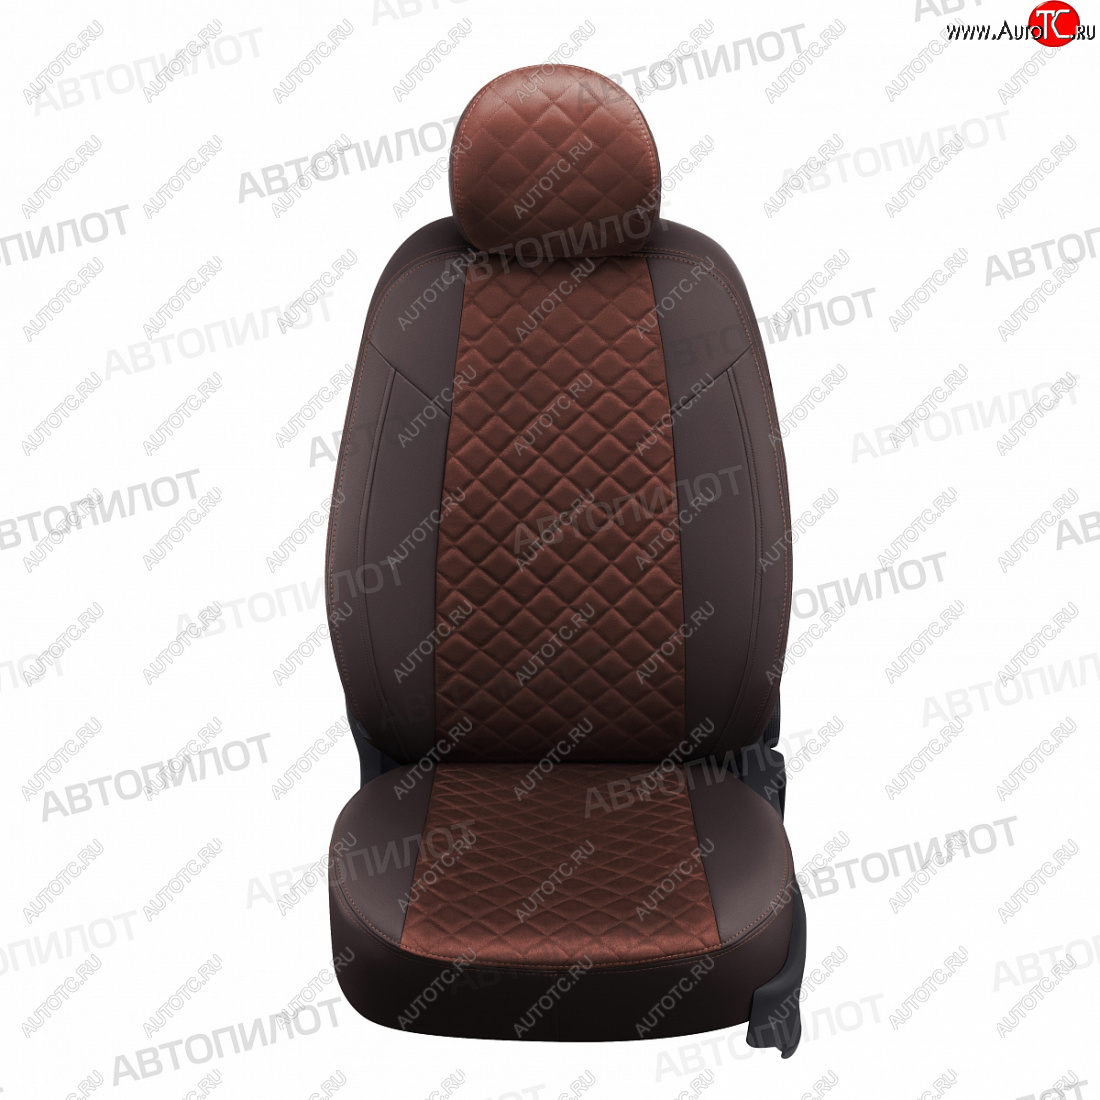 13 999 р. Чехлы сидений (экокожа/алькантара) Автопилот Ромб  Chevrolet Aveo  T300 (2011-2015) (шоколад)